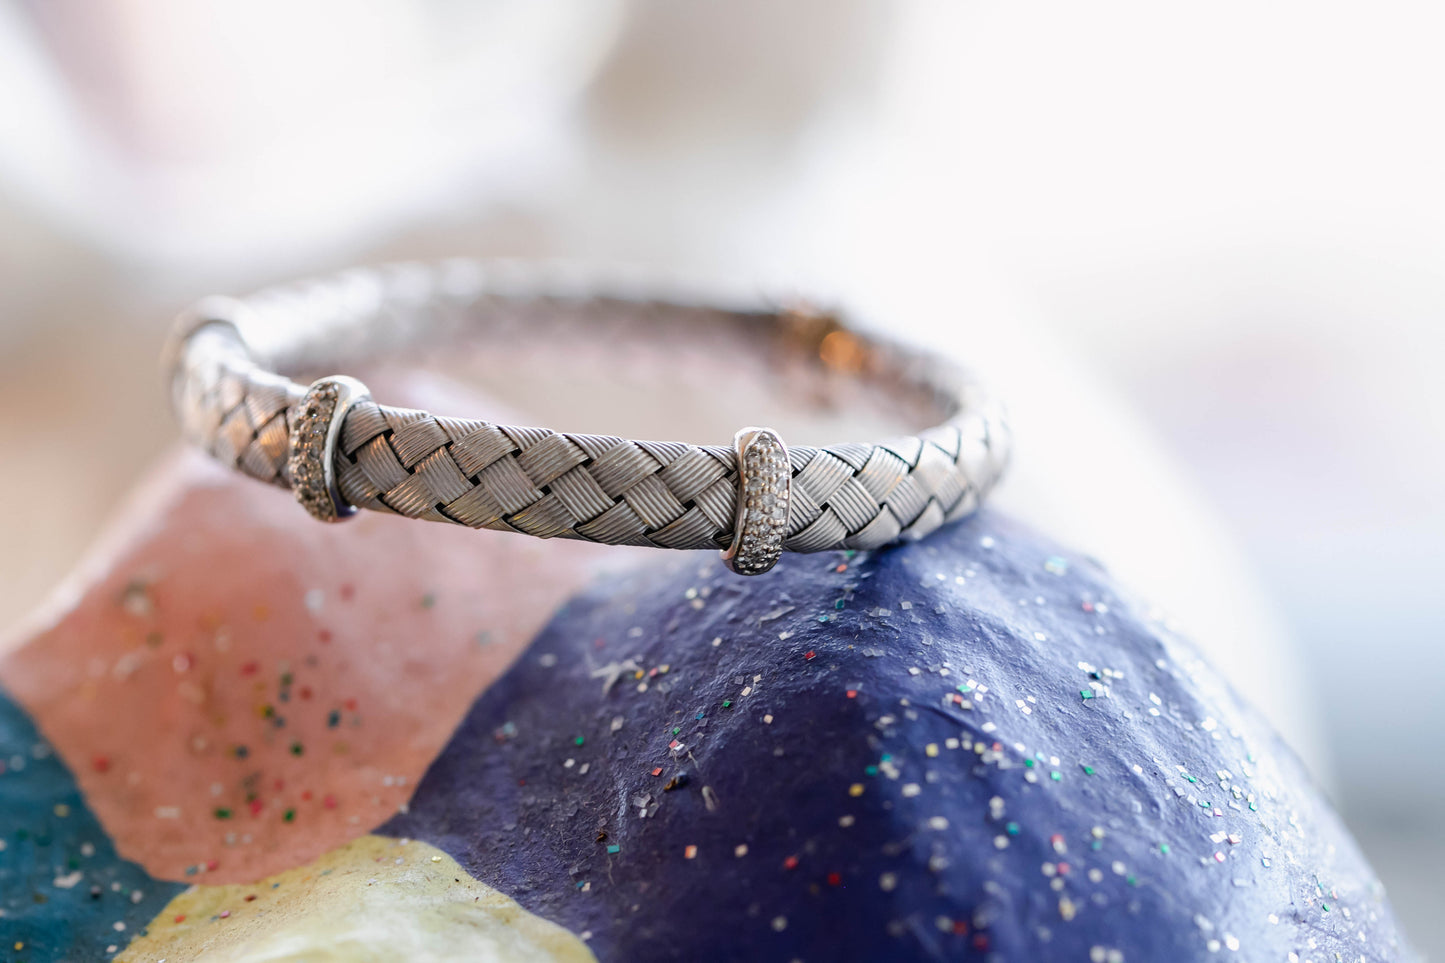 White gold and diamond woven mesh bracelet